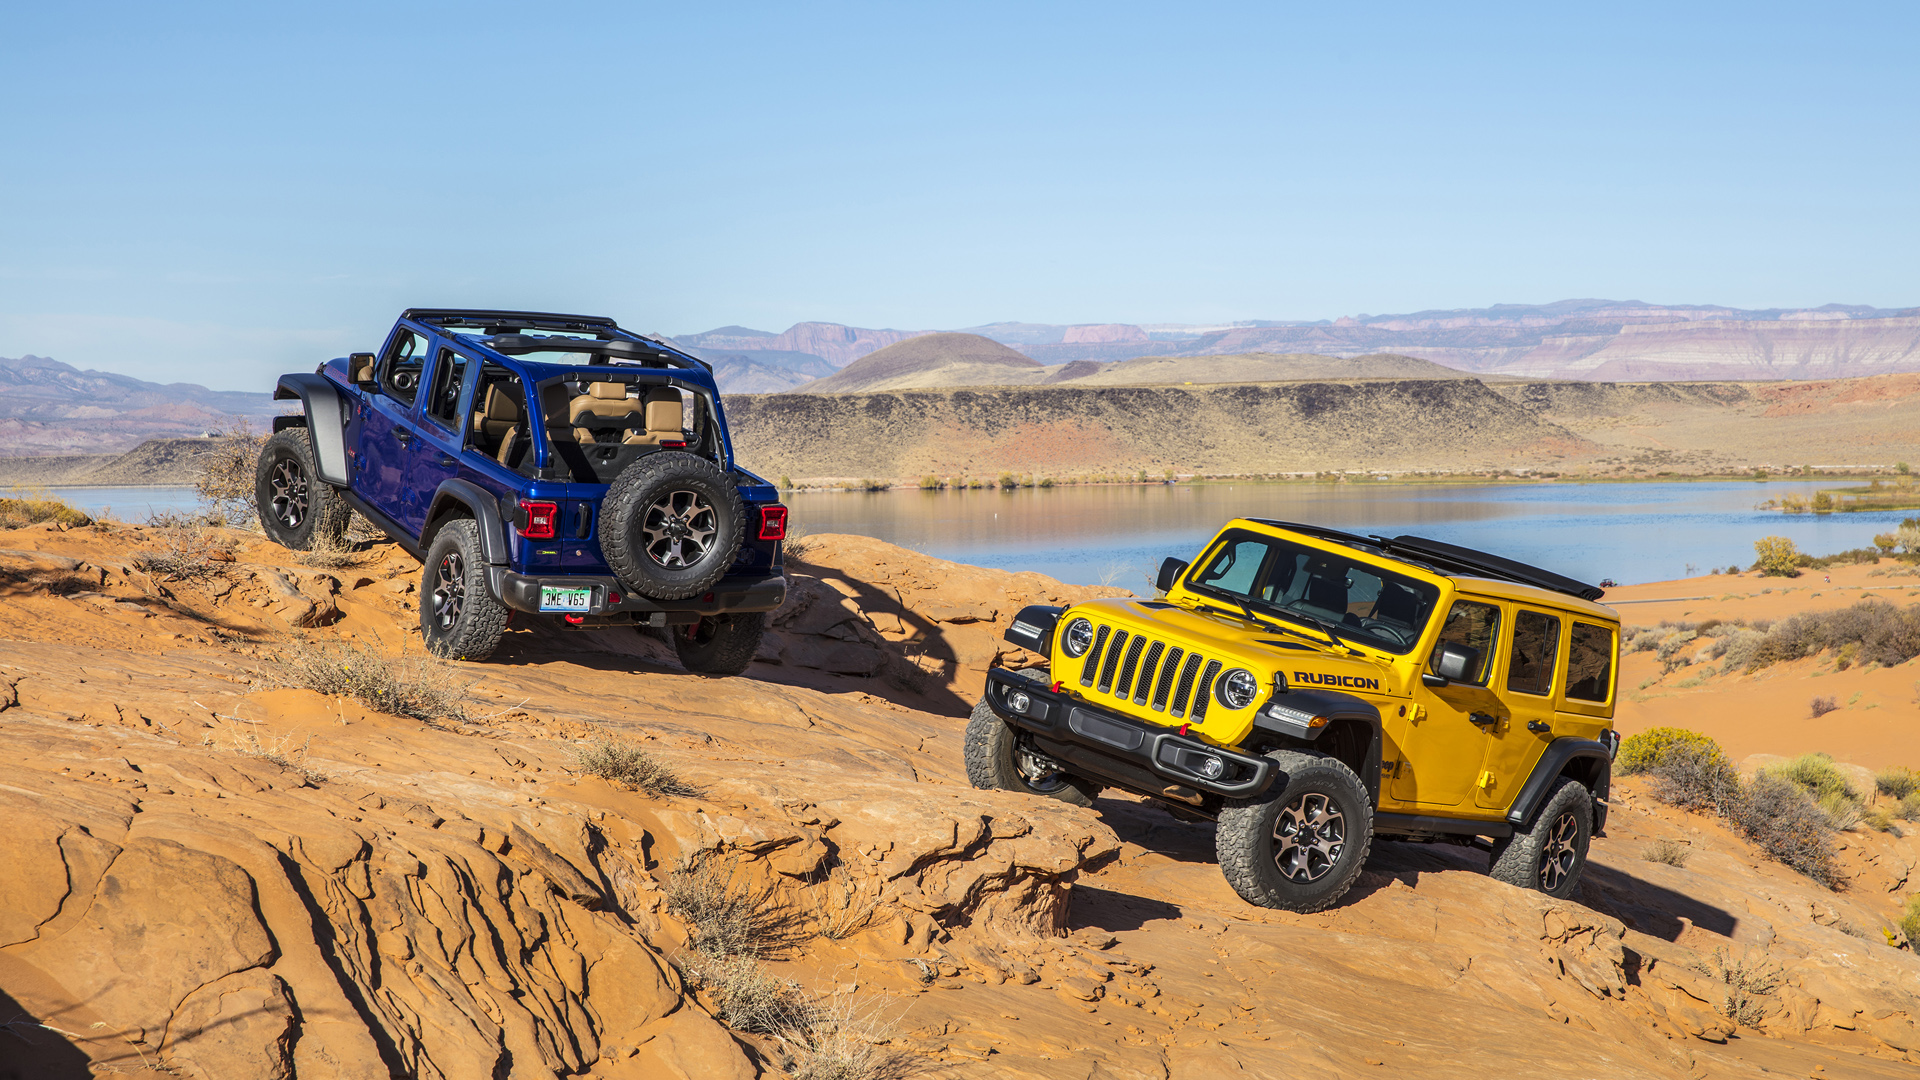 Jeep Adventure Academy program dates, cost announced Autoblog